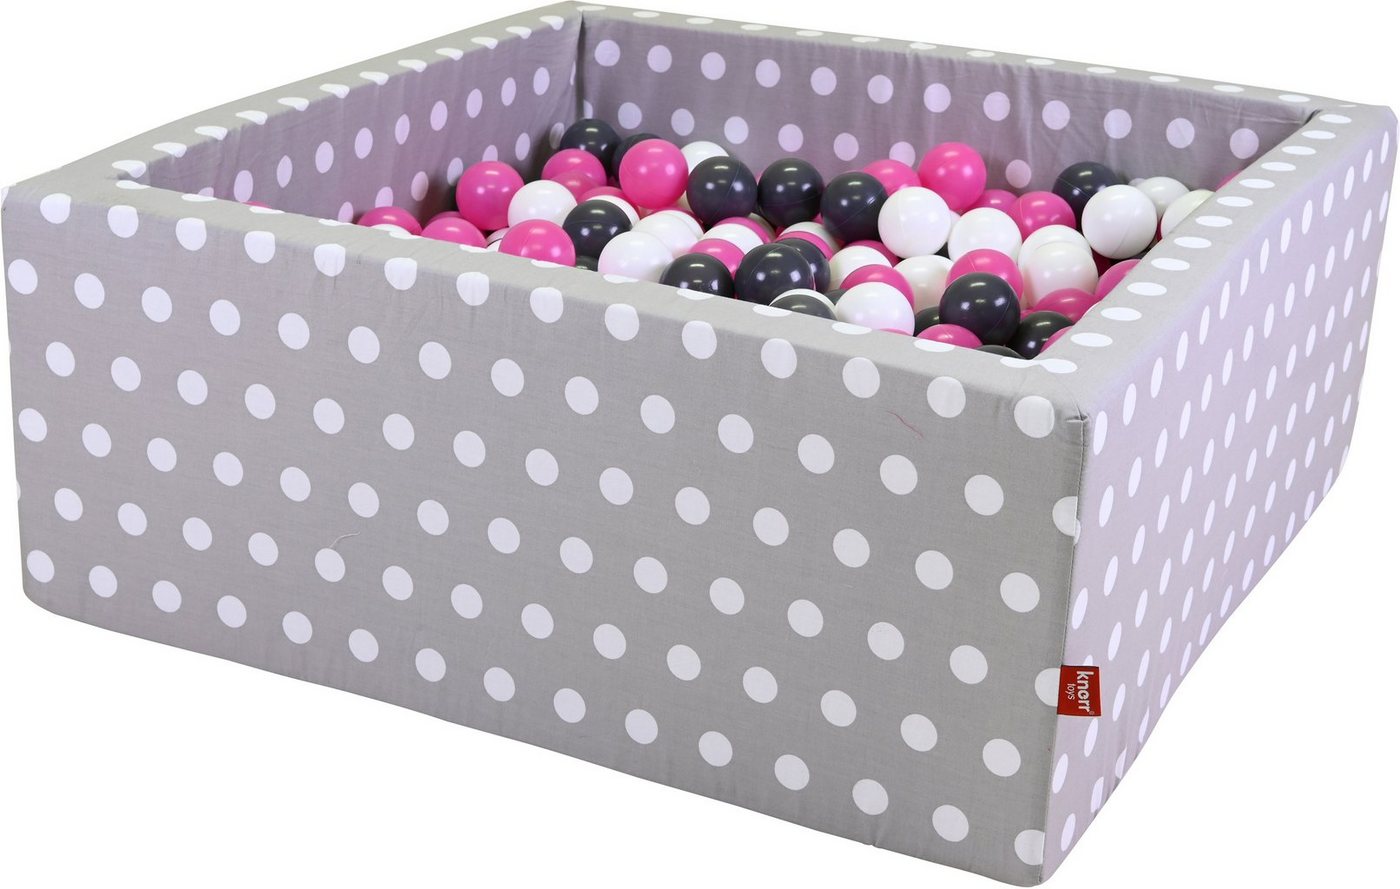 Knorrtoys® Bällebad Soft, Grey White Dots, eckig mit 100 Bällen creme/Grey/rose, Made in Europe von Knorrtoys®